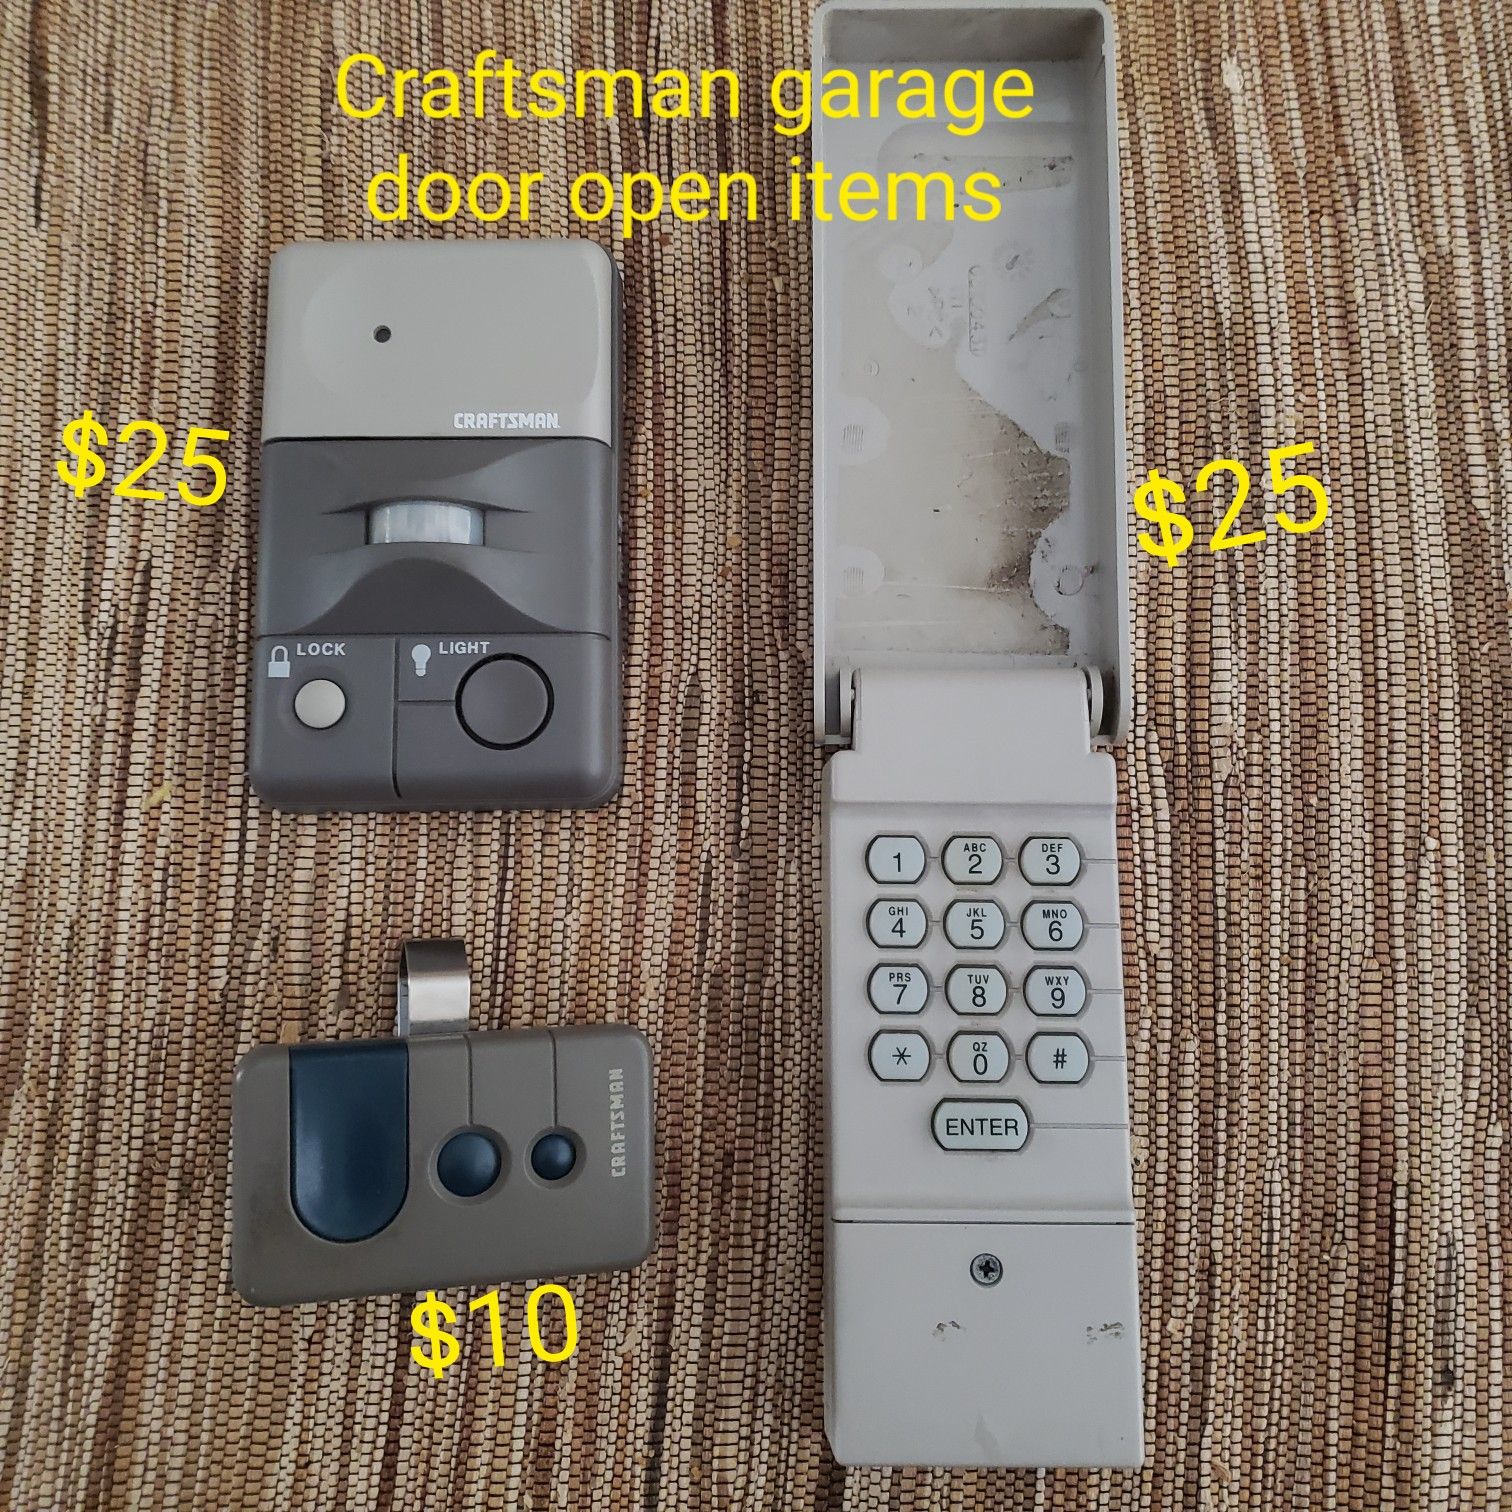 Craftsman Garage Door Opener Items - see prices on photos